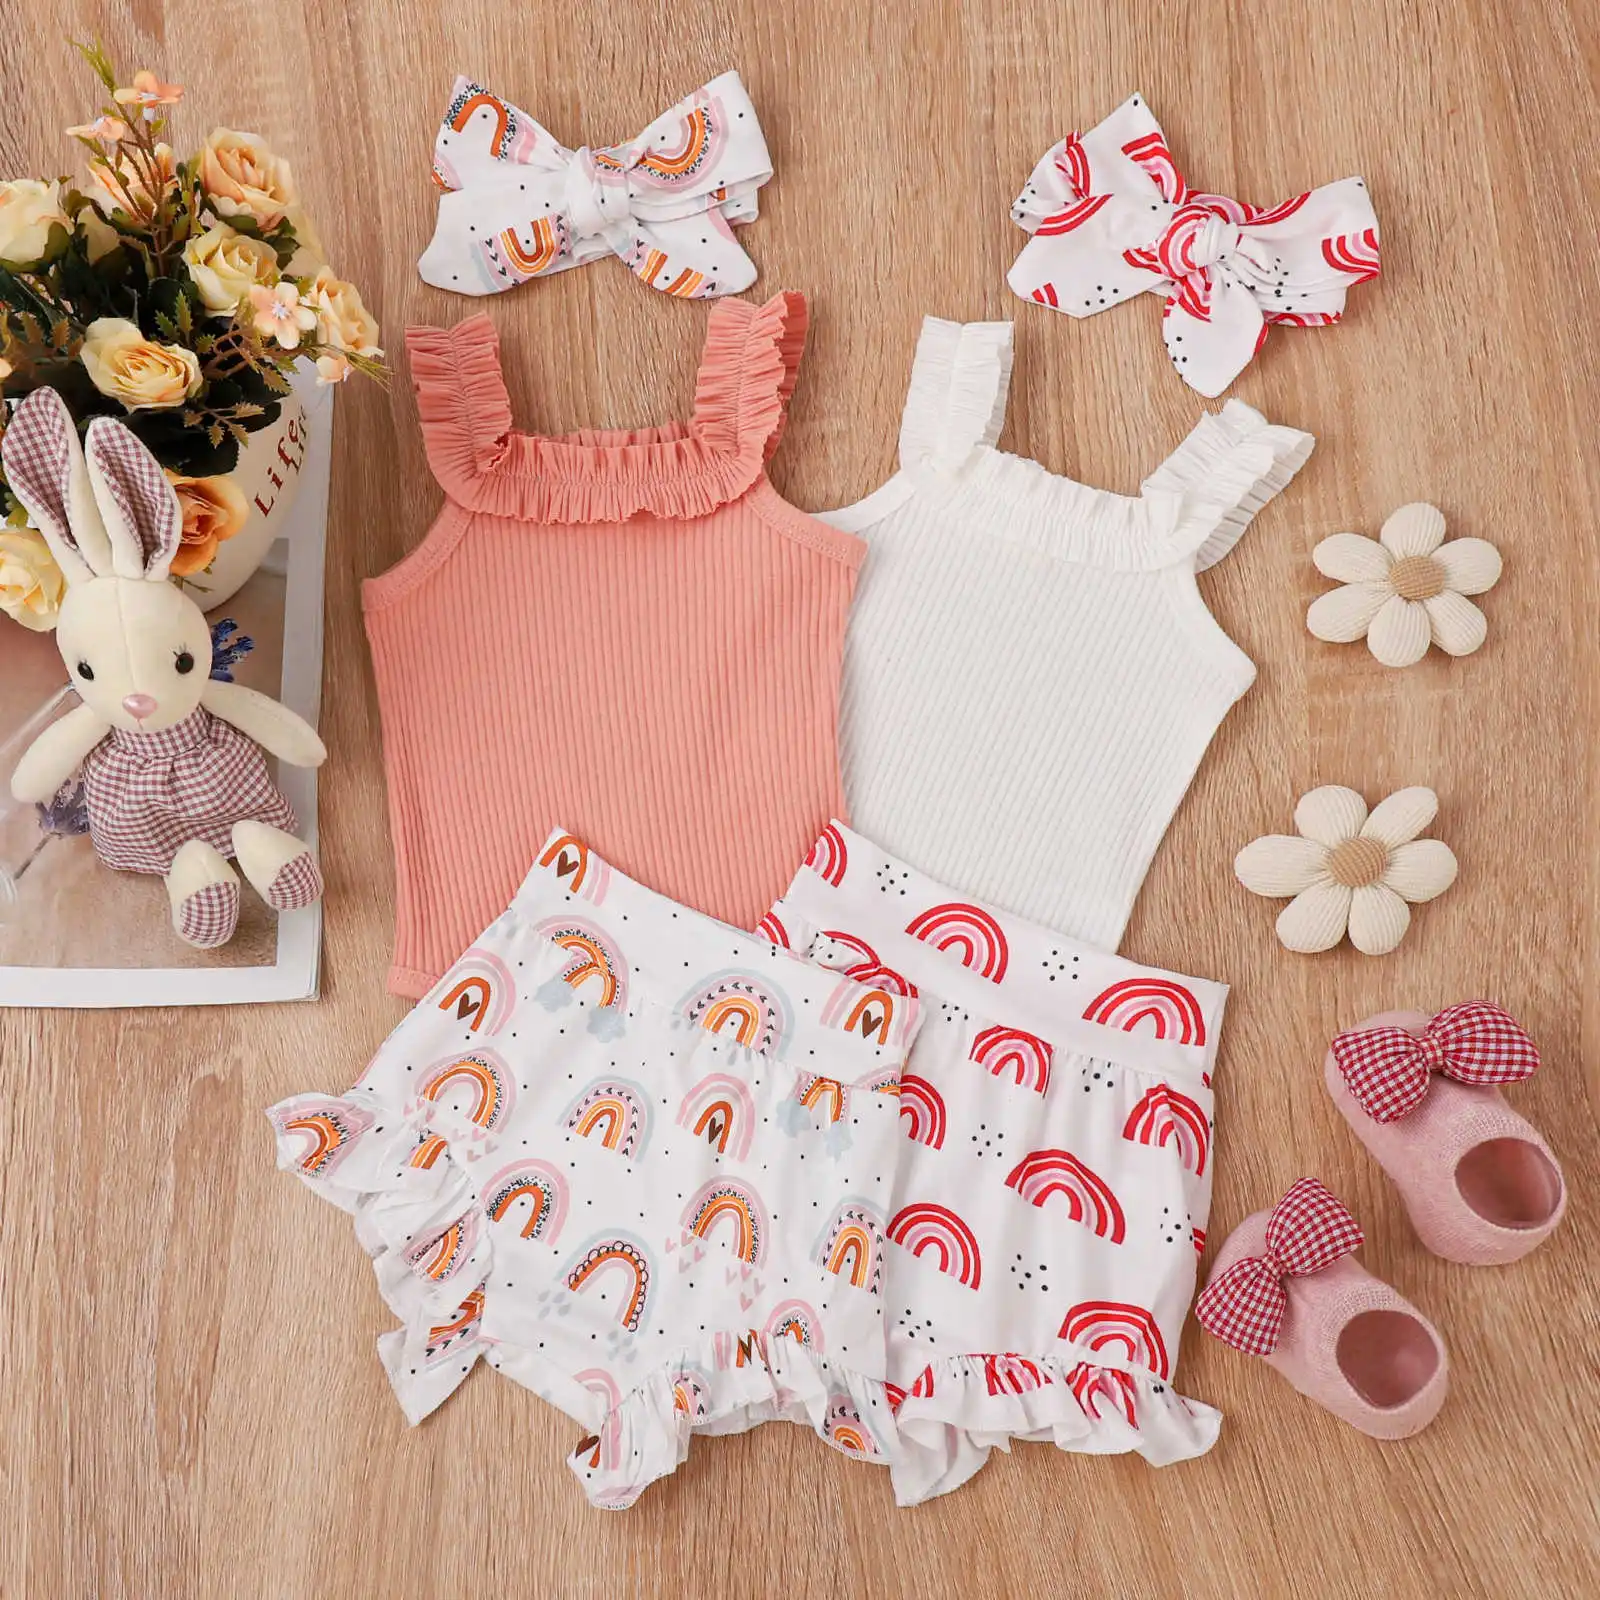 Infants Girl 3Pcs Outfits Suit Sleeveless Sling Pit Stripe Romper+Rainbow Printed Shorts+Headband Newborn Toddler Clothing 0-18M